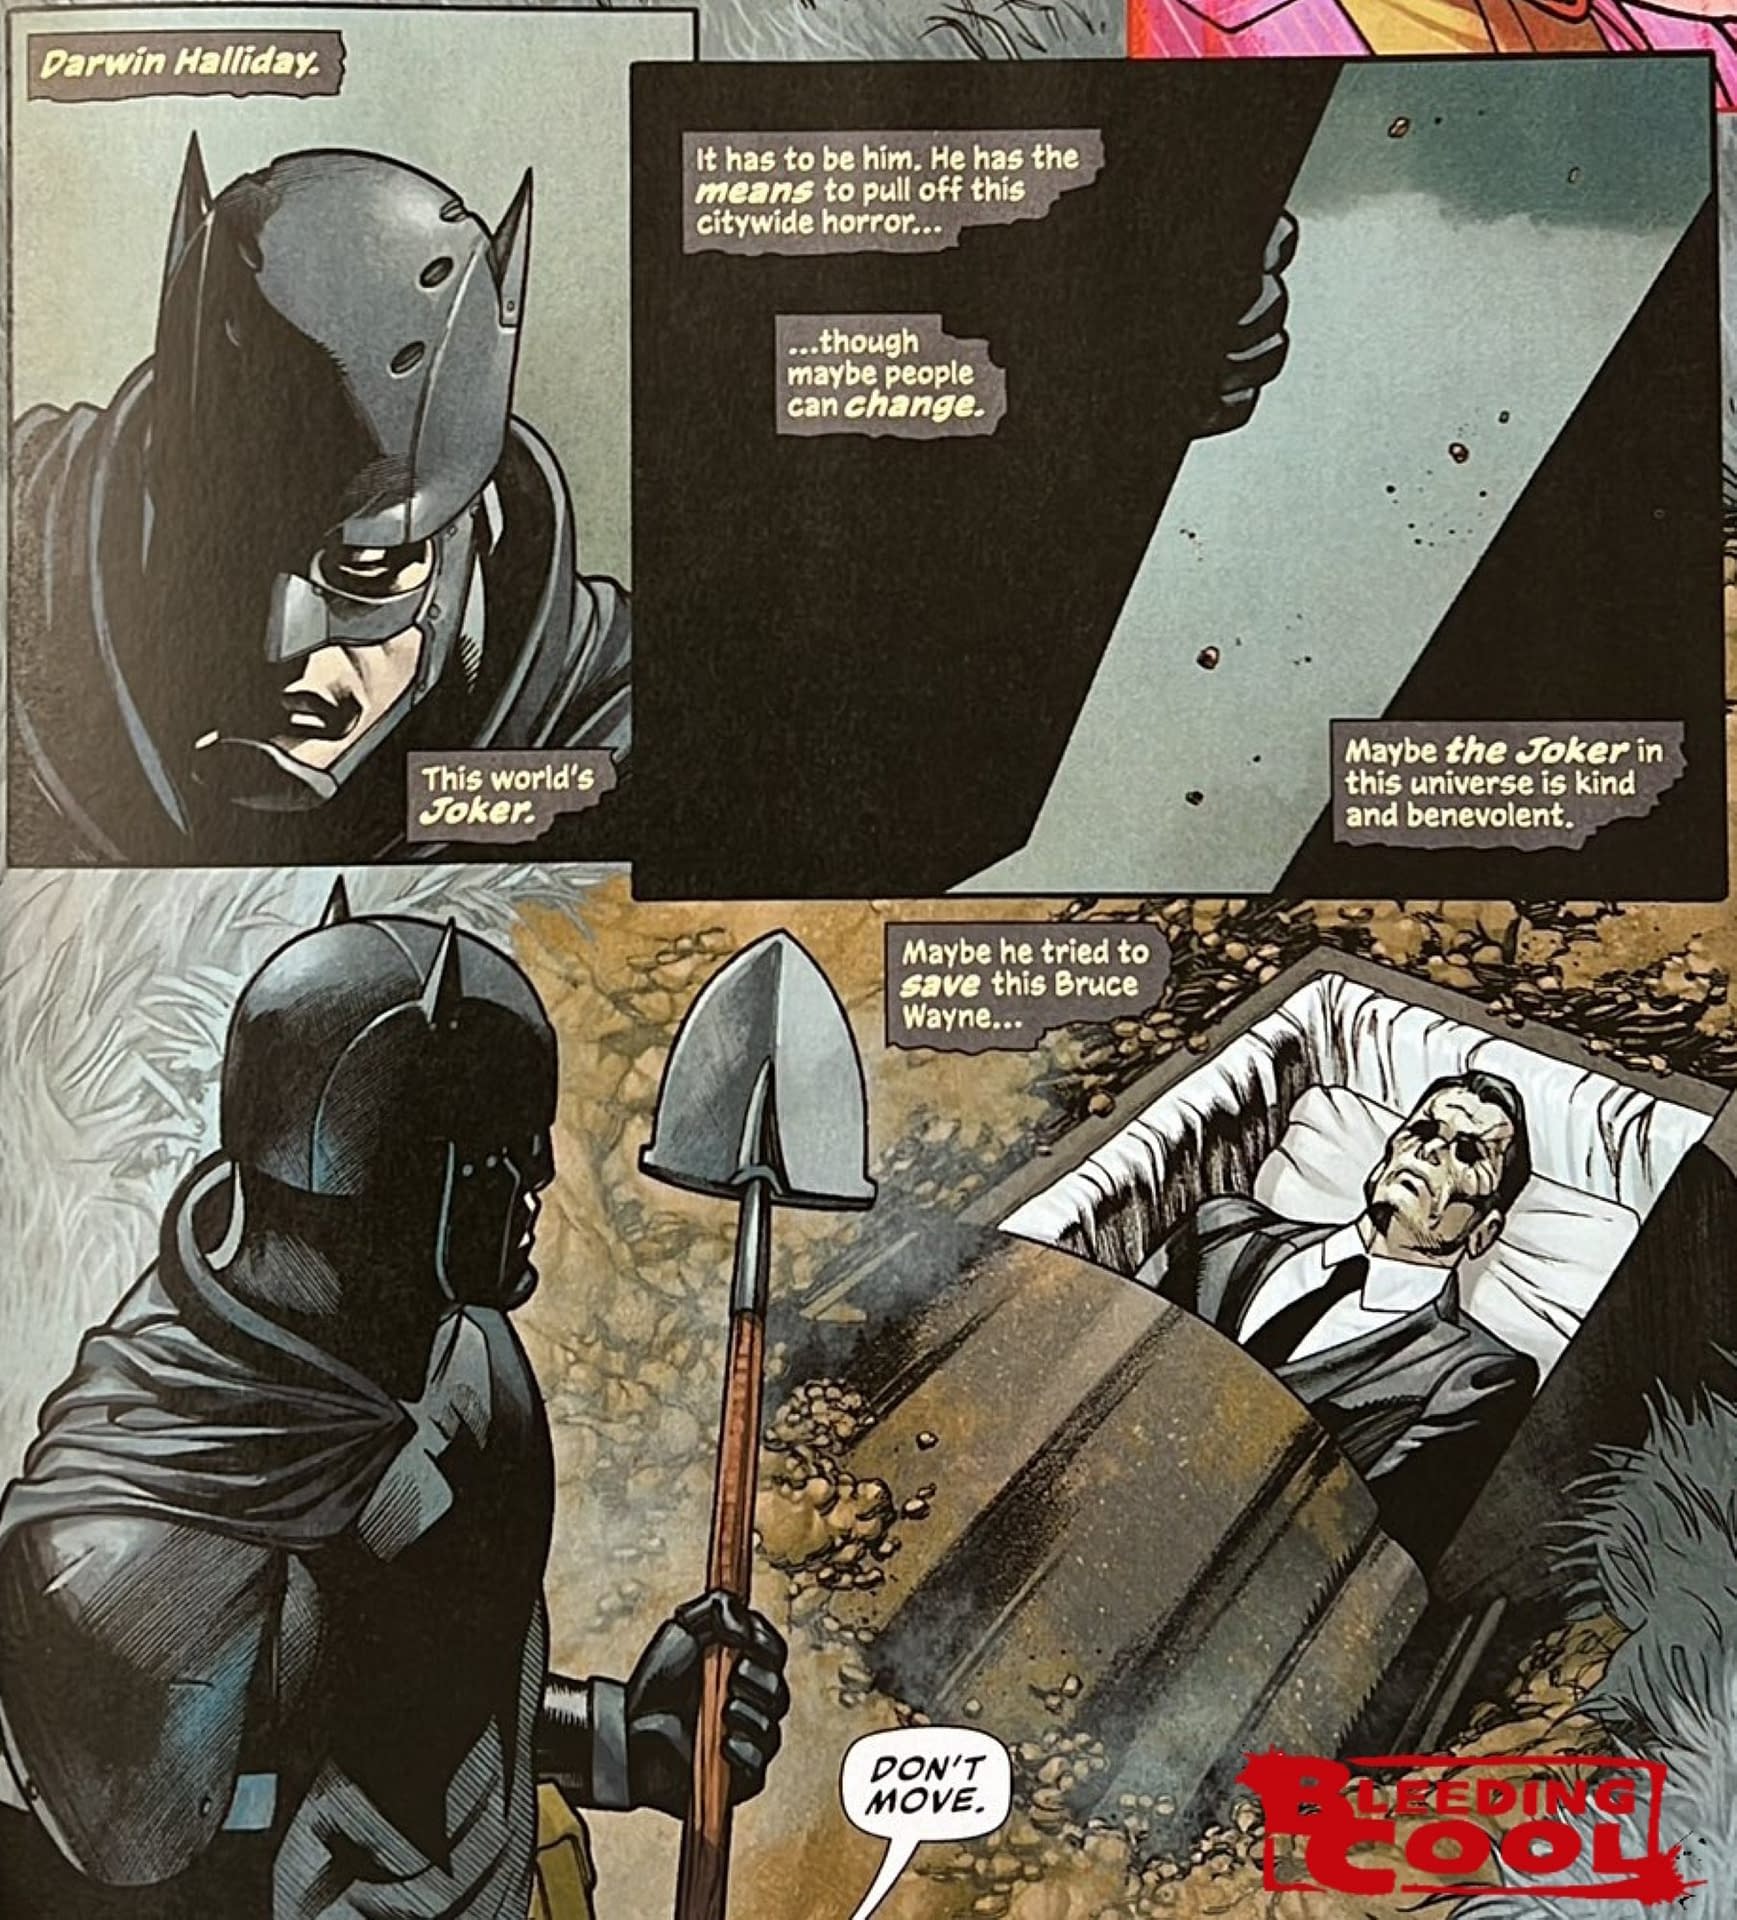 Is This Weekend At Bruce's? Batman #133 BatSpoilers